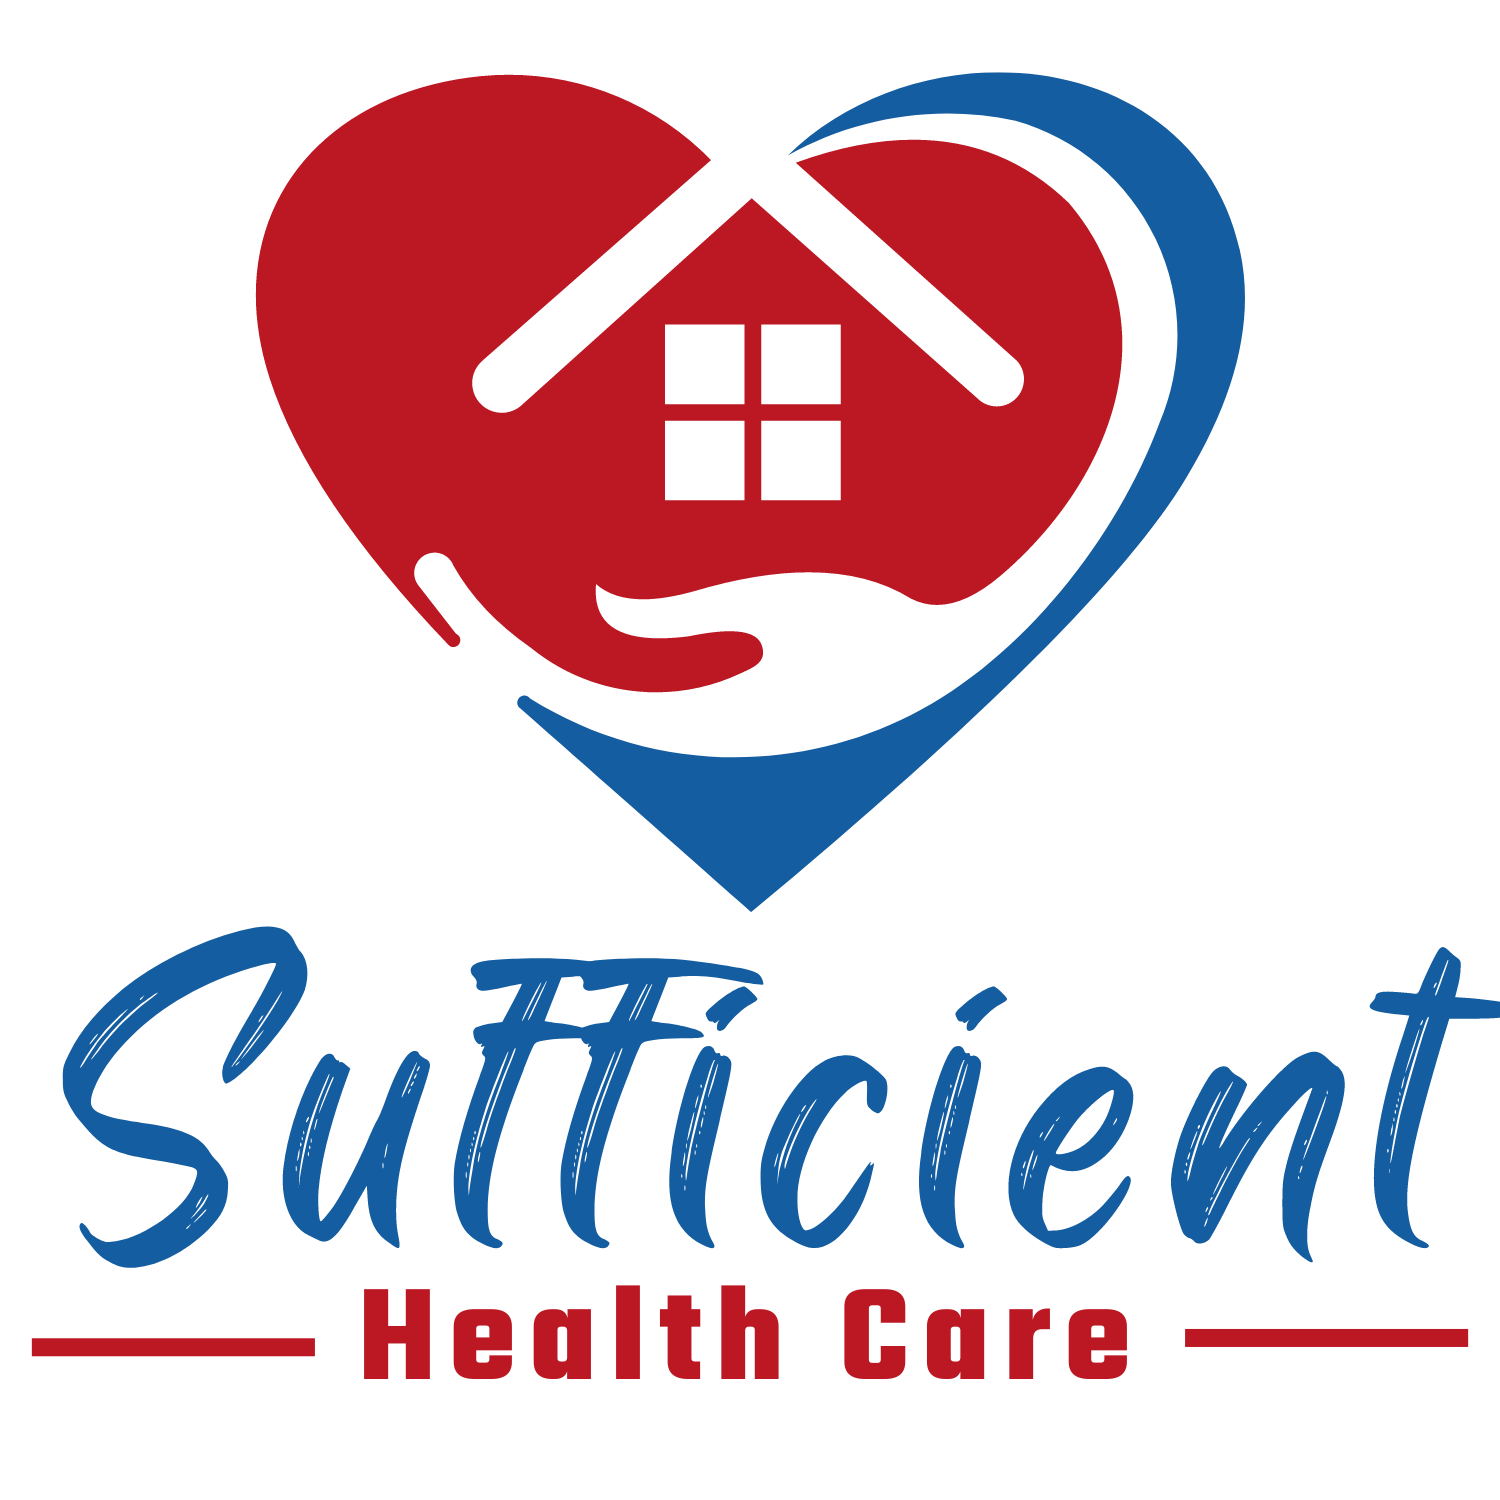 Sufficient Health Care